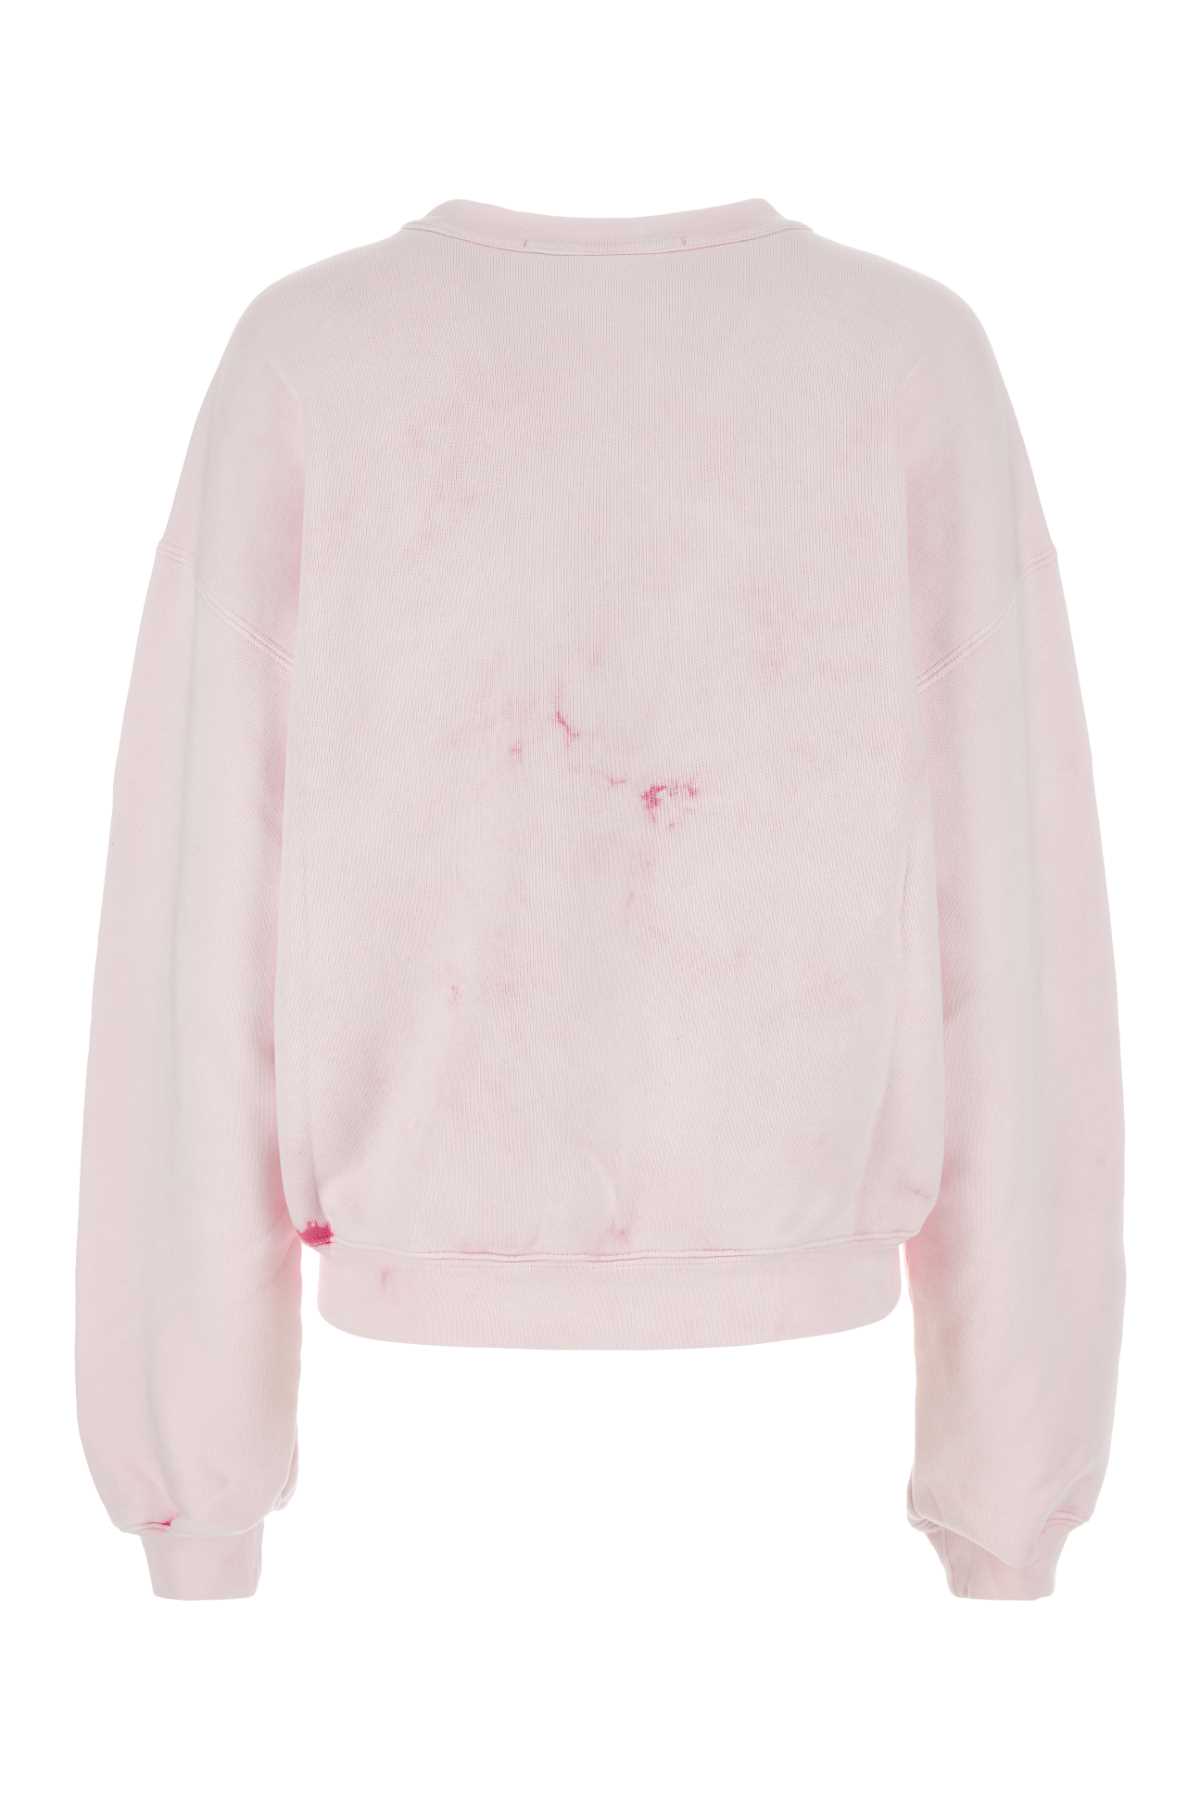 Alexander Wang Pastel Pink Cotton Sweatshirt In Ltpinkbleachout